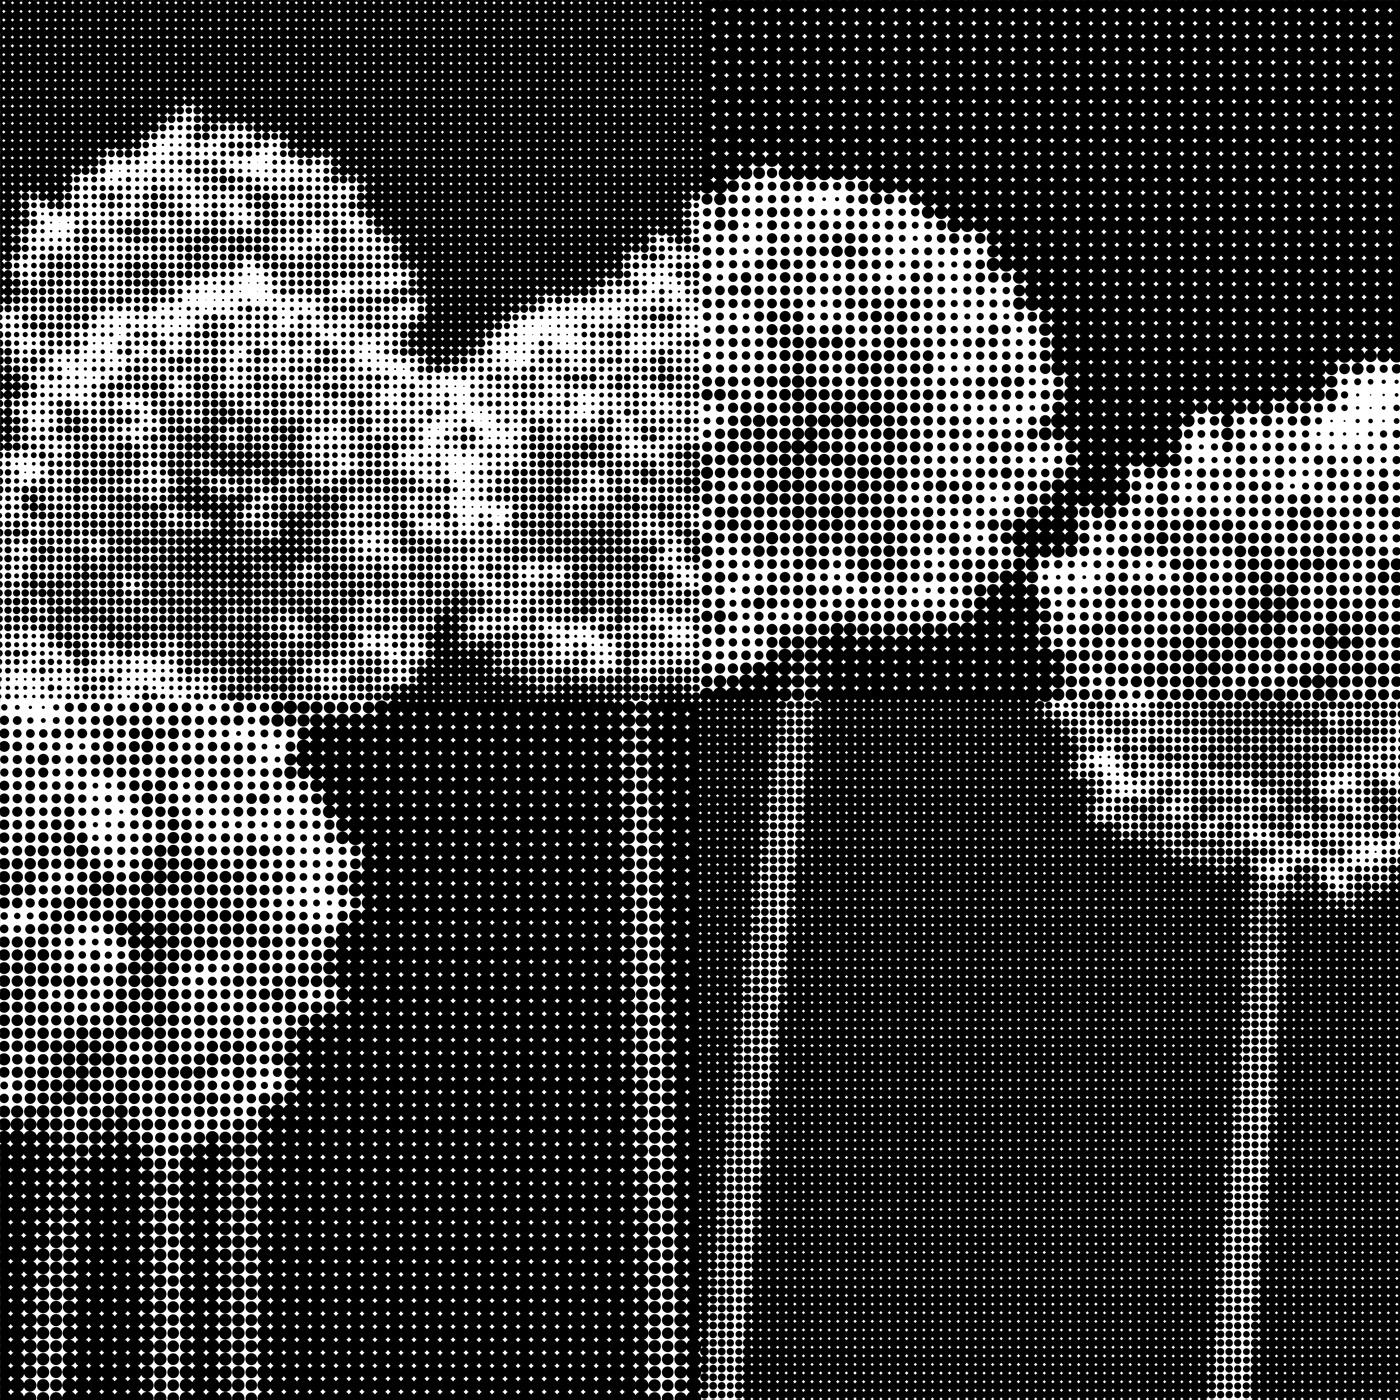 Stephen Bezas Black and White Photograph - Untitled "Allium"